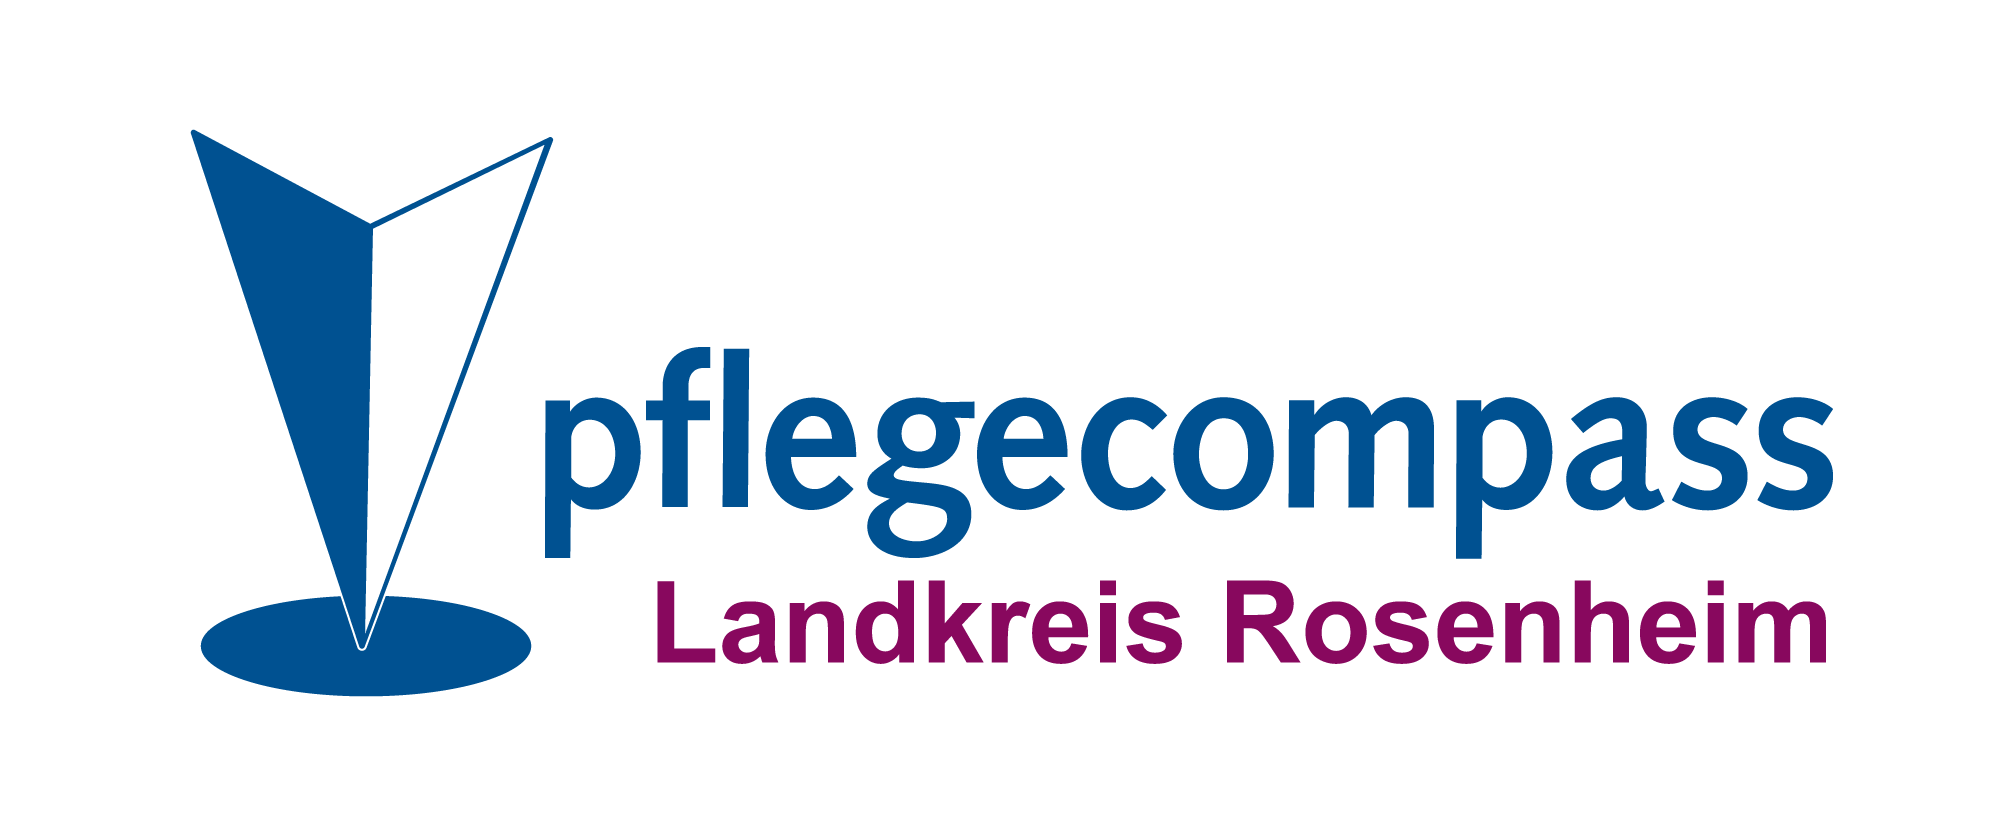 logo pflegecompass LK Rosenheim 20220209 02